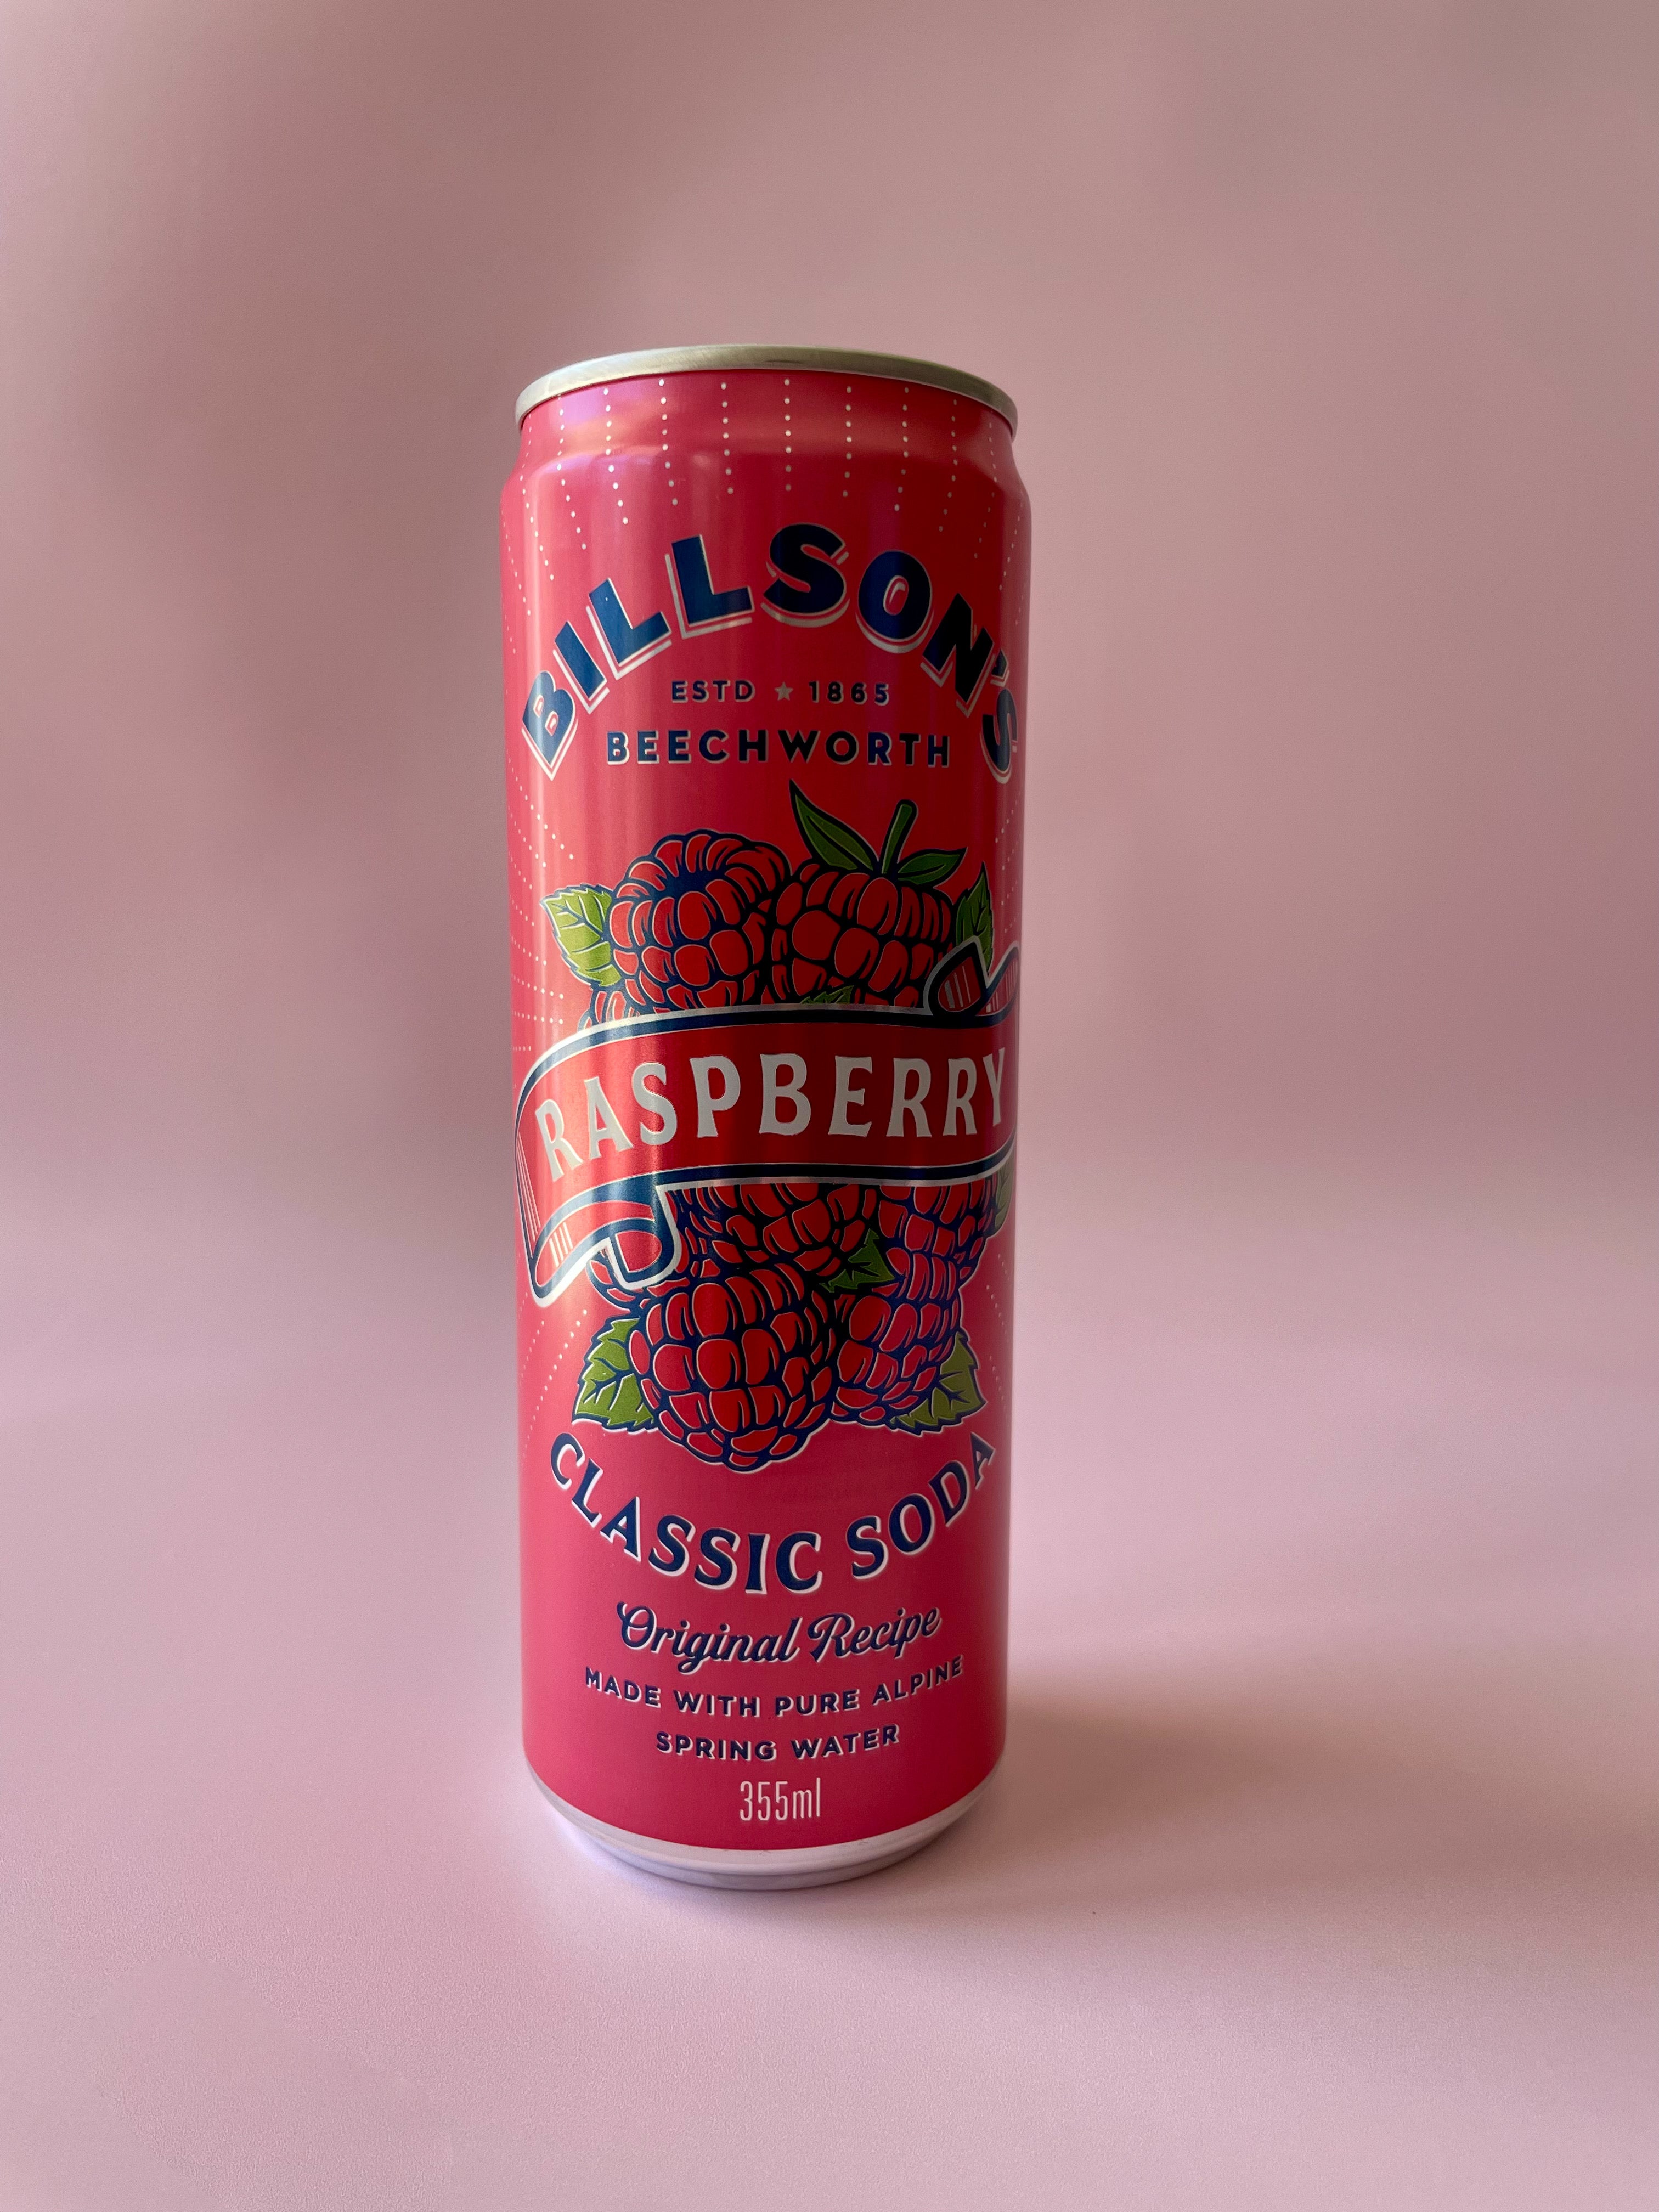 Billson's Raspberry Classic Soda